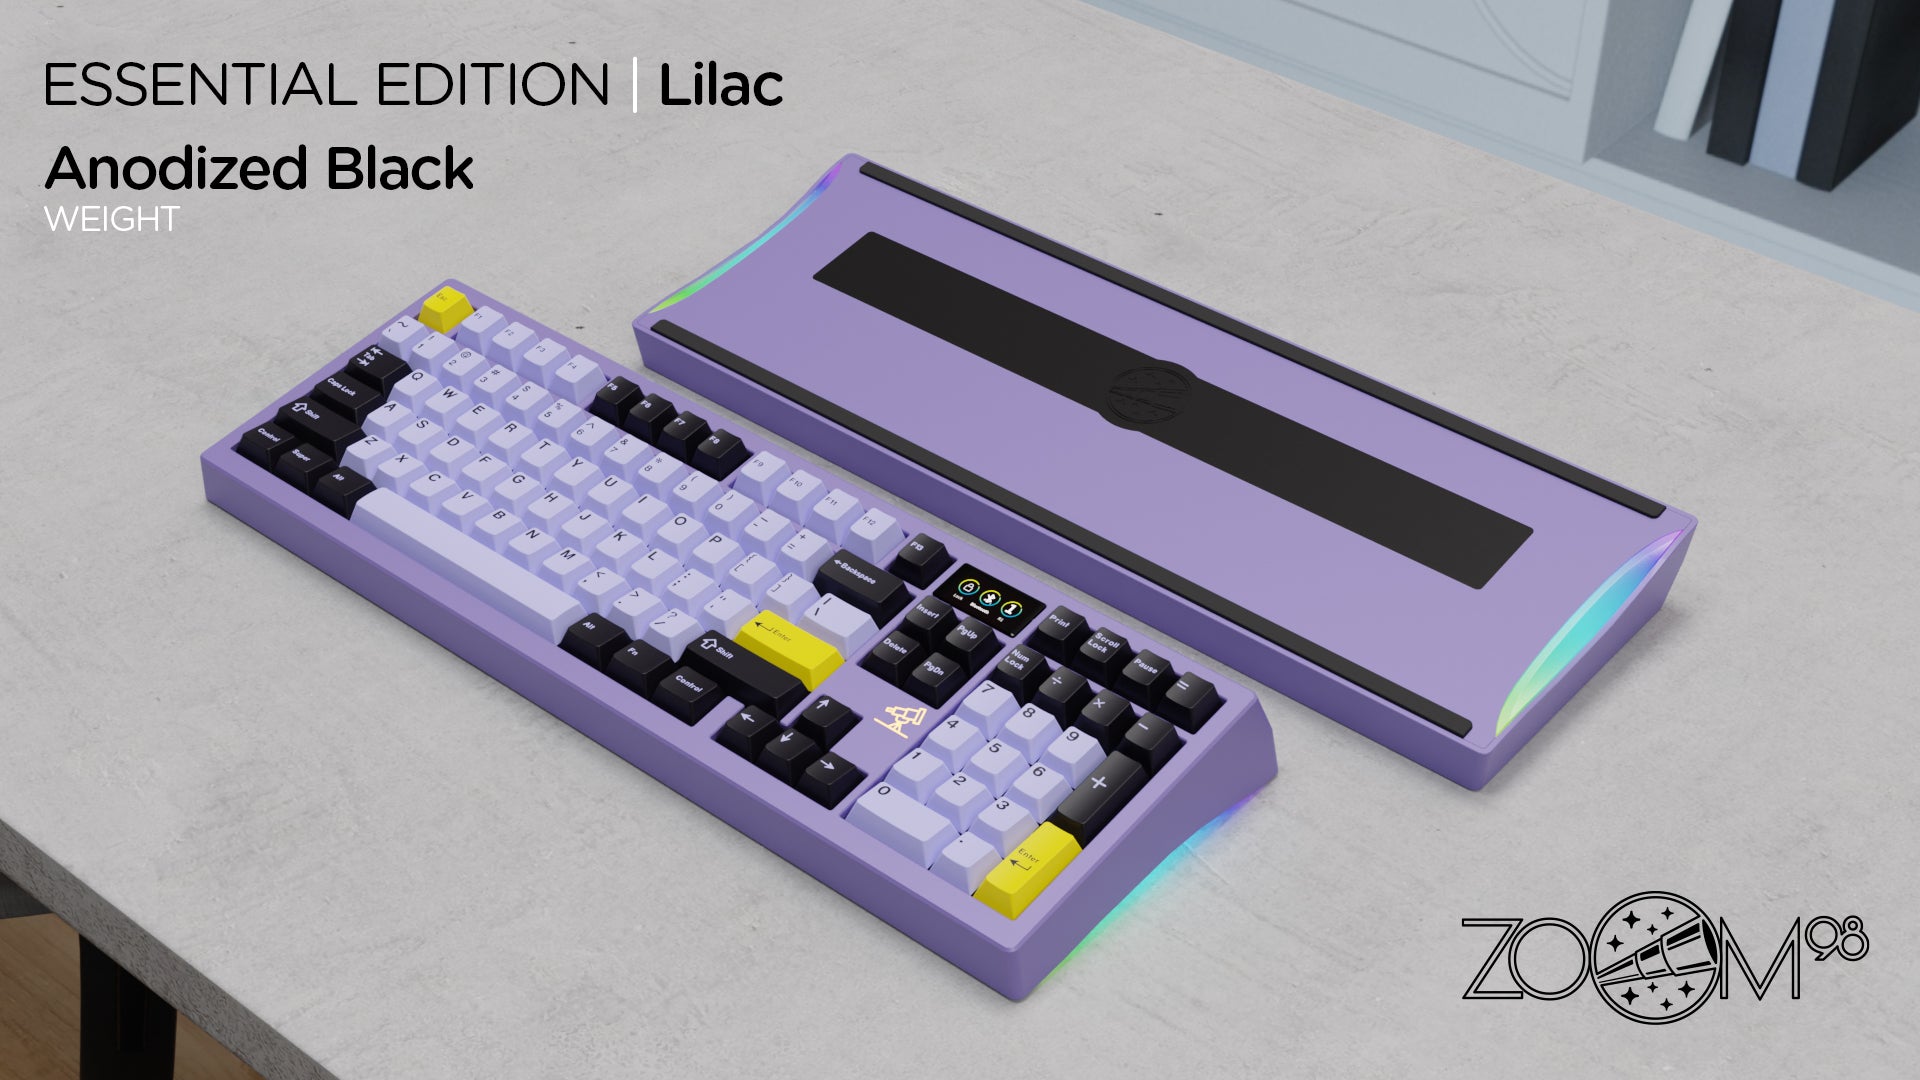 Zoom98 EE Lilac